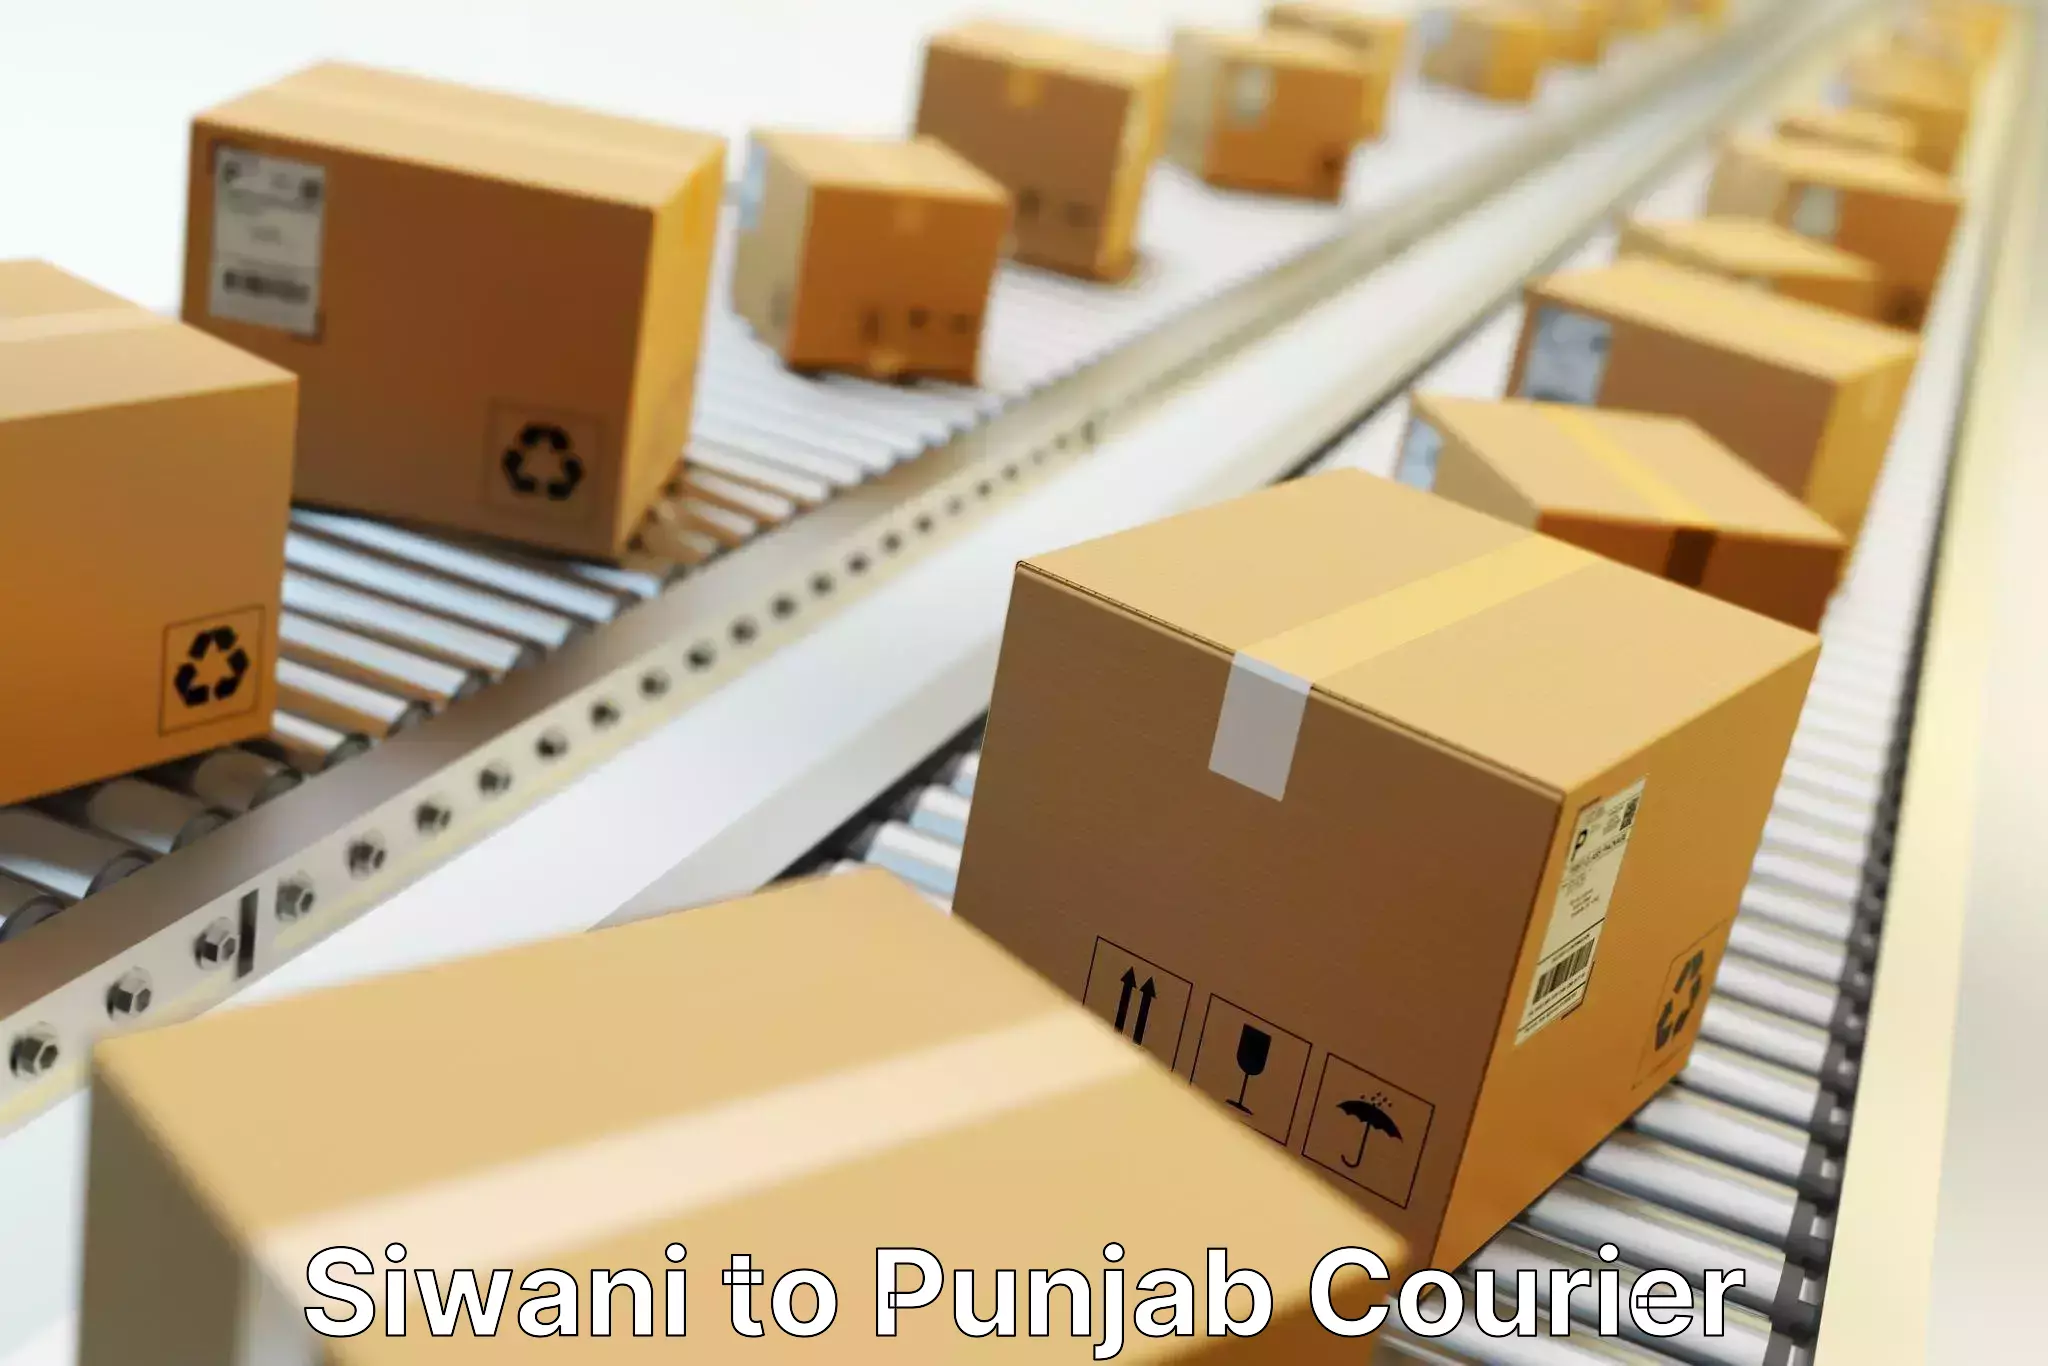 Speedy delivery service Siwani to Punjab